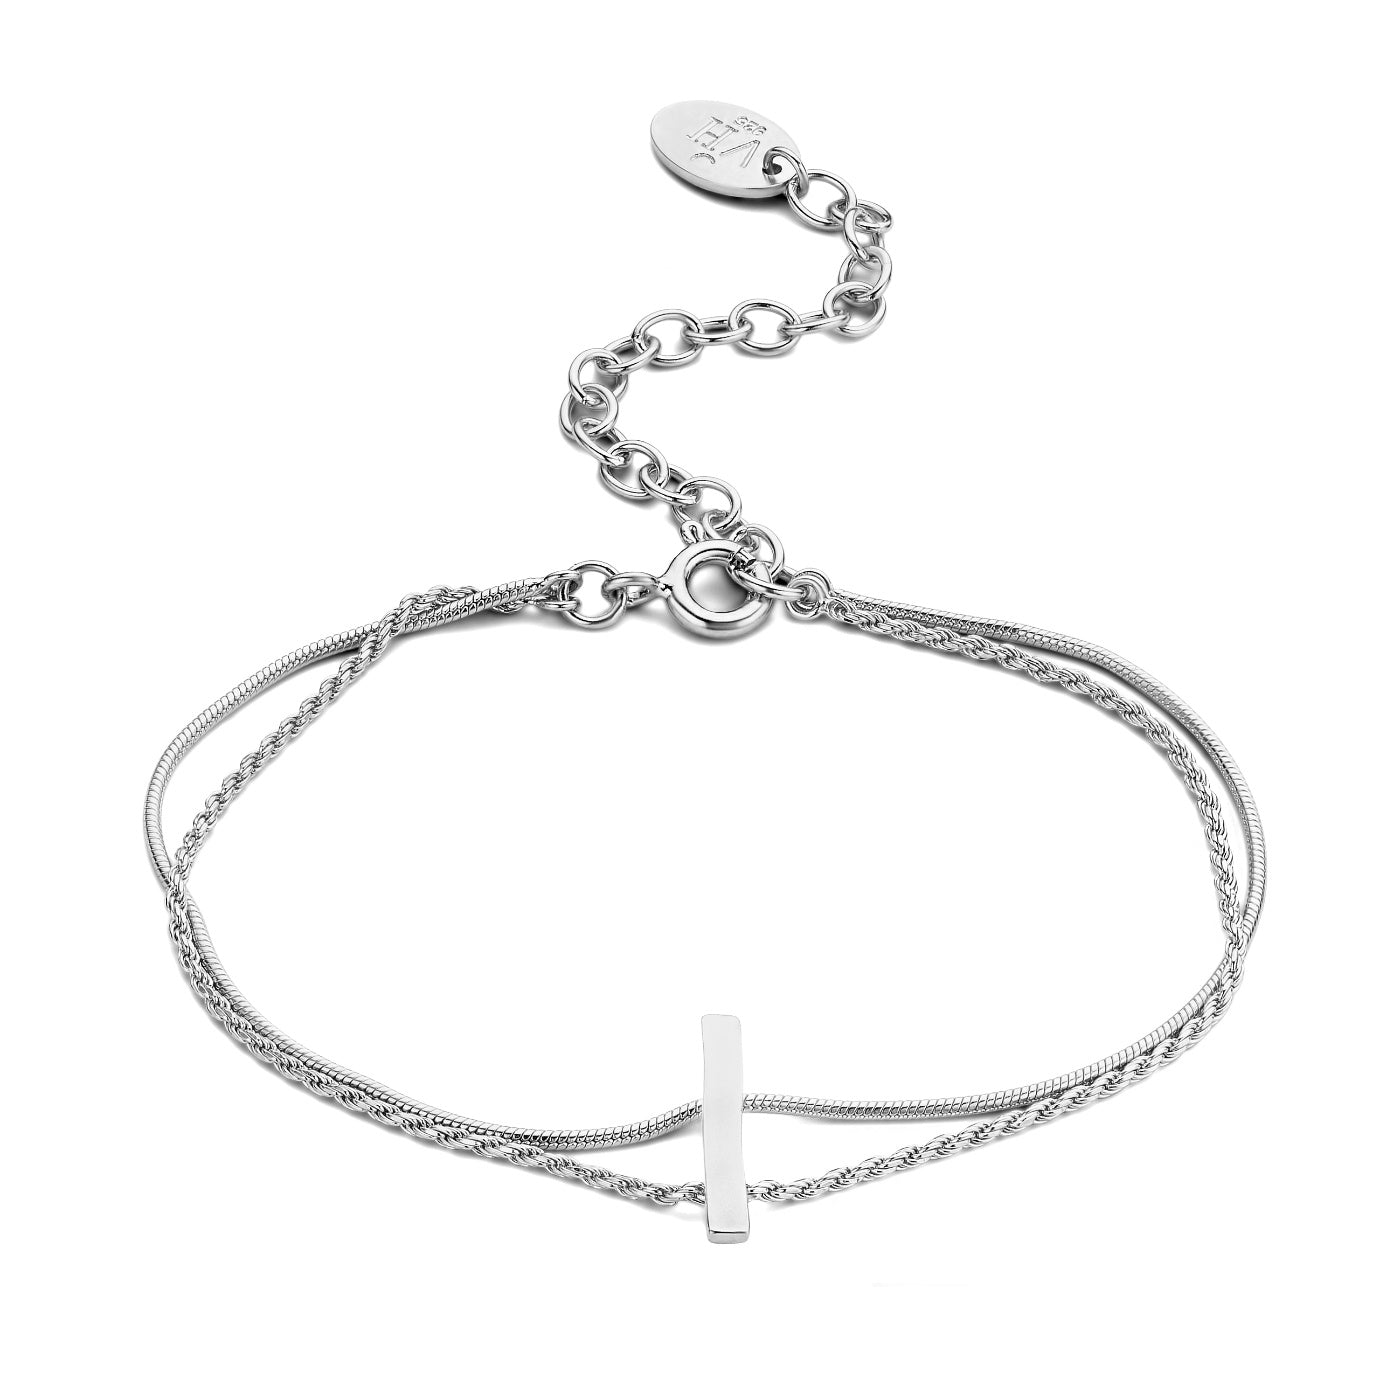 Sisterhood Moonscape 925 sterling silver double bracelet with bar